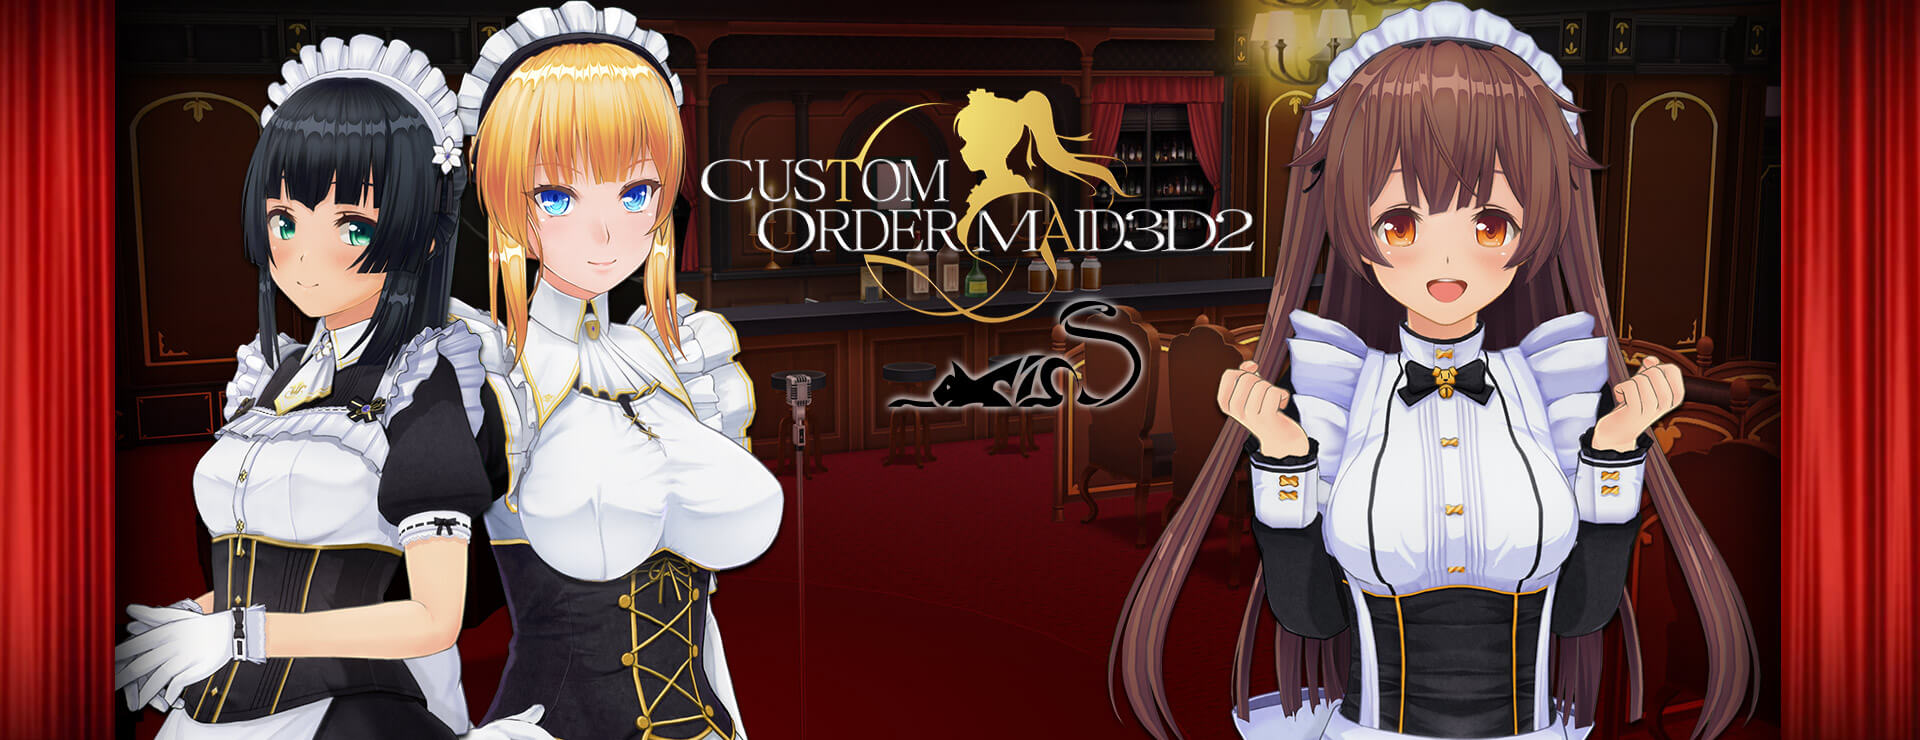 Custom Order Maid 3D2 - It's a Night Magic Premium Empire Bundle - Symulacja Gra